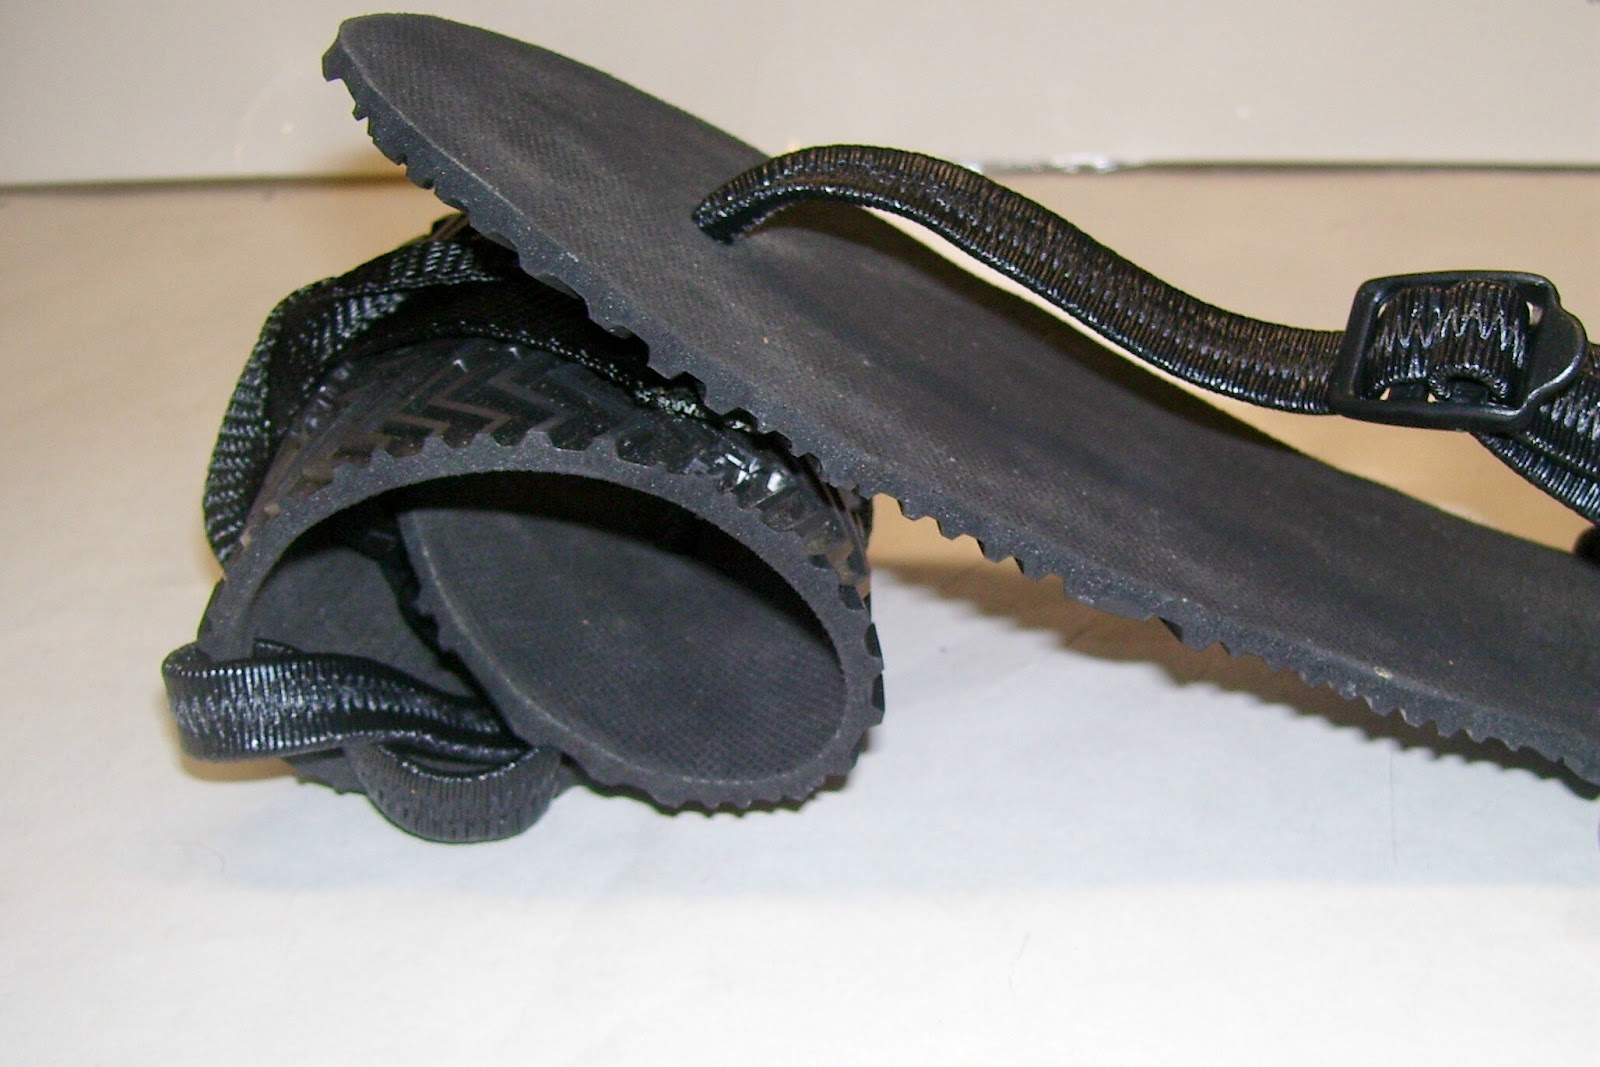 Barefoot Running Sandals: New All-Terrain/Trail Sandals